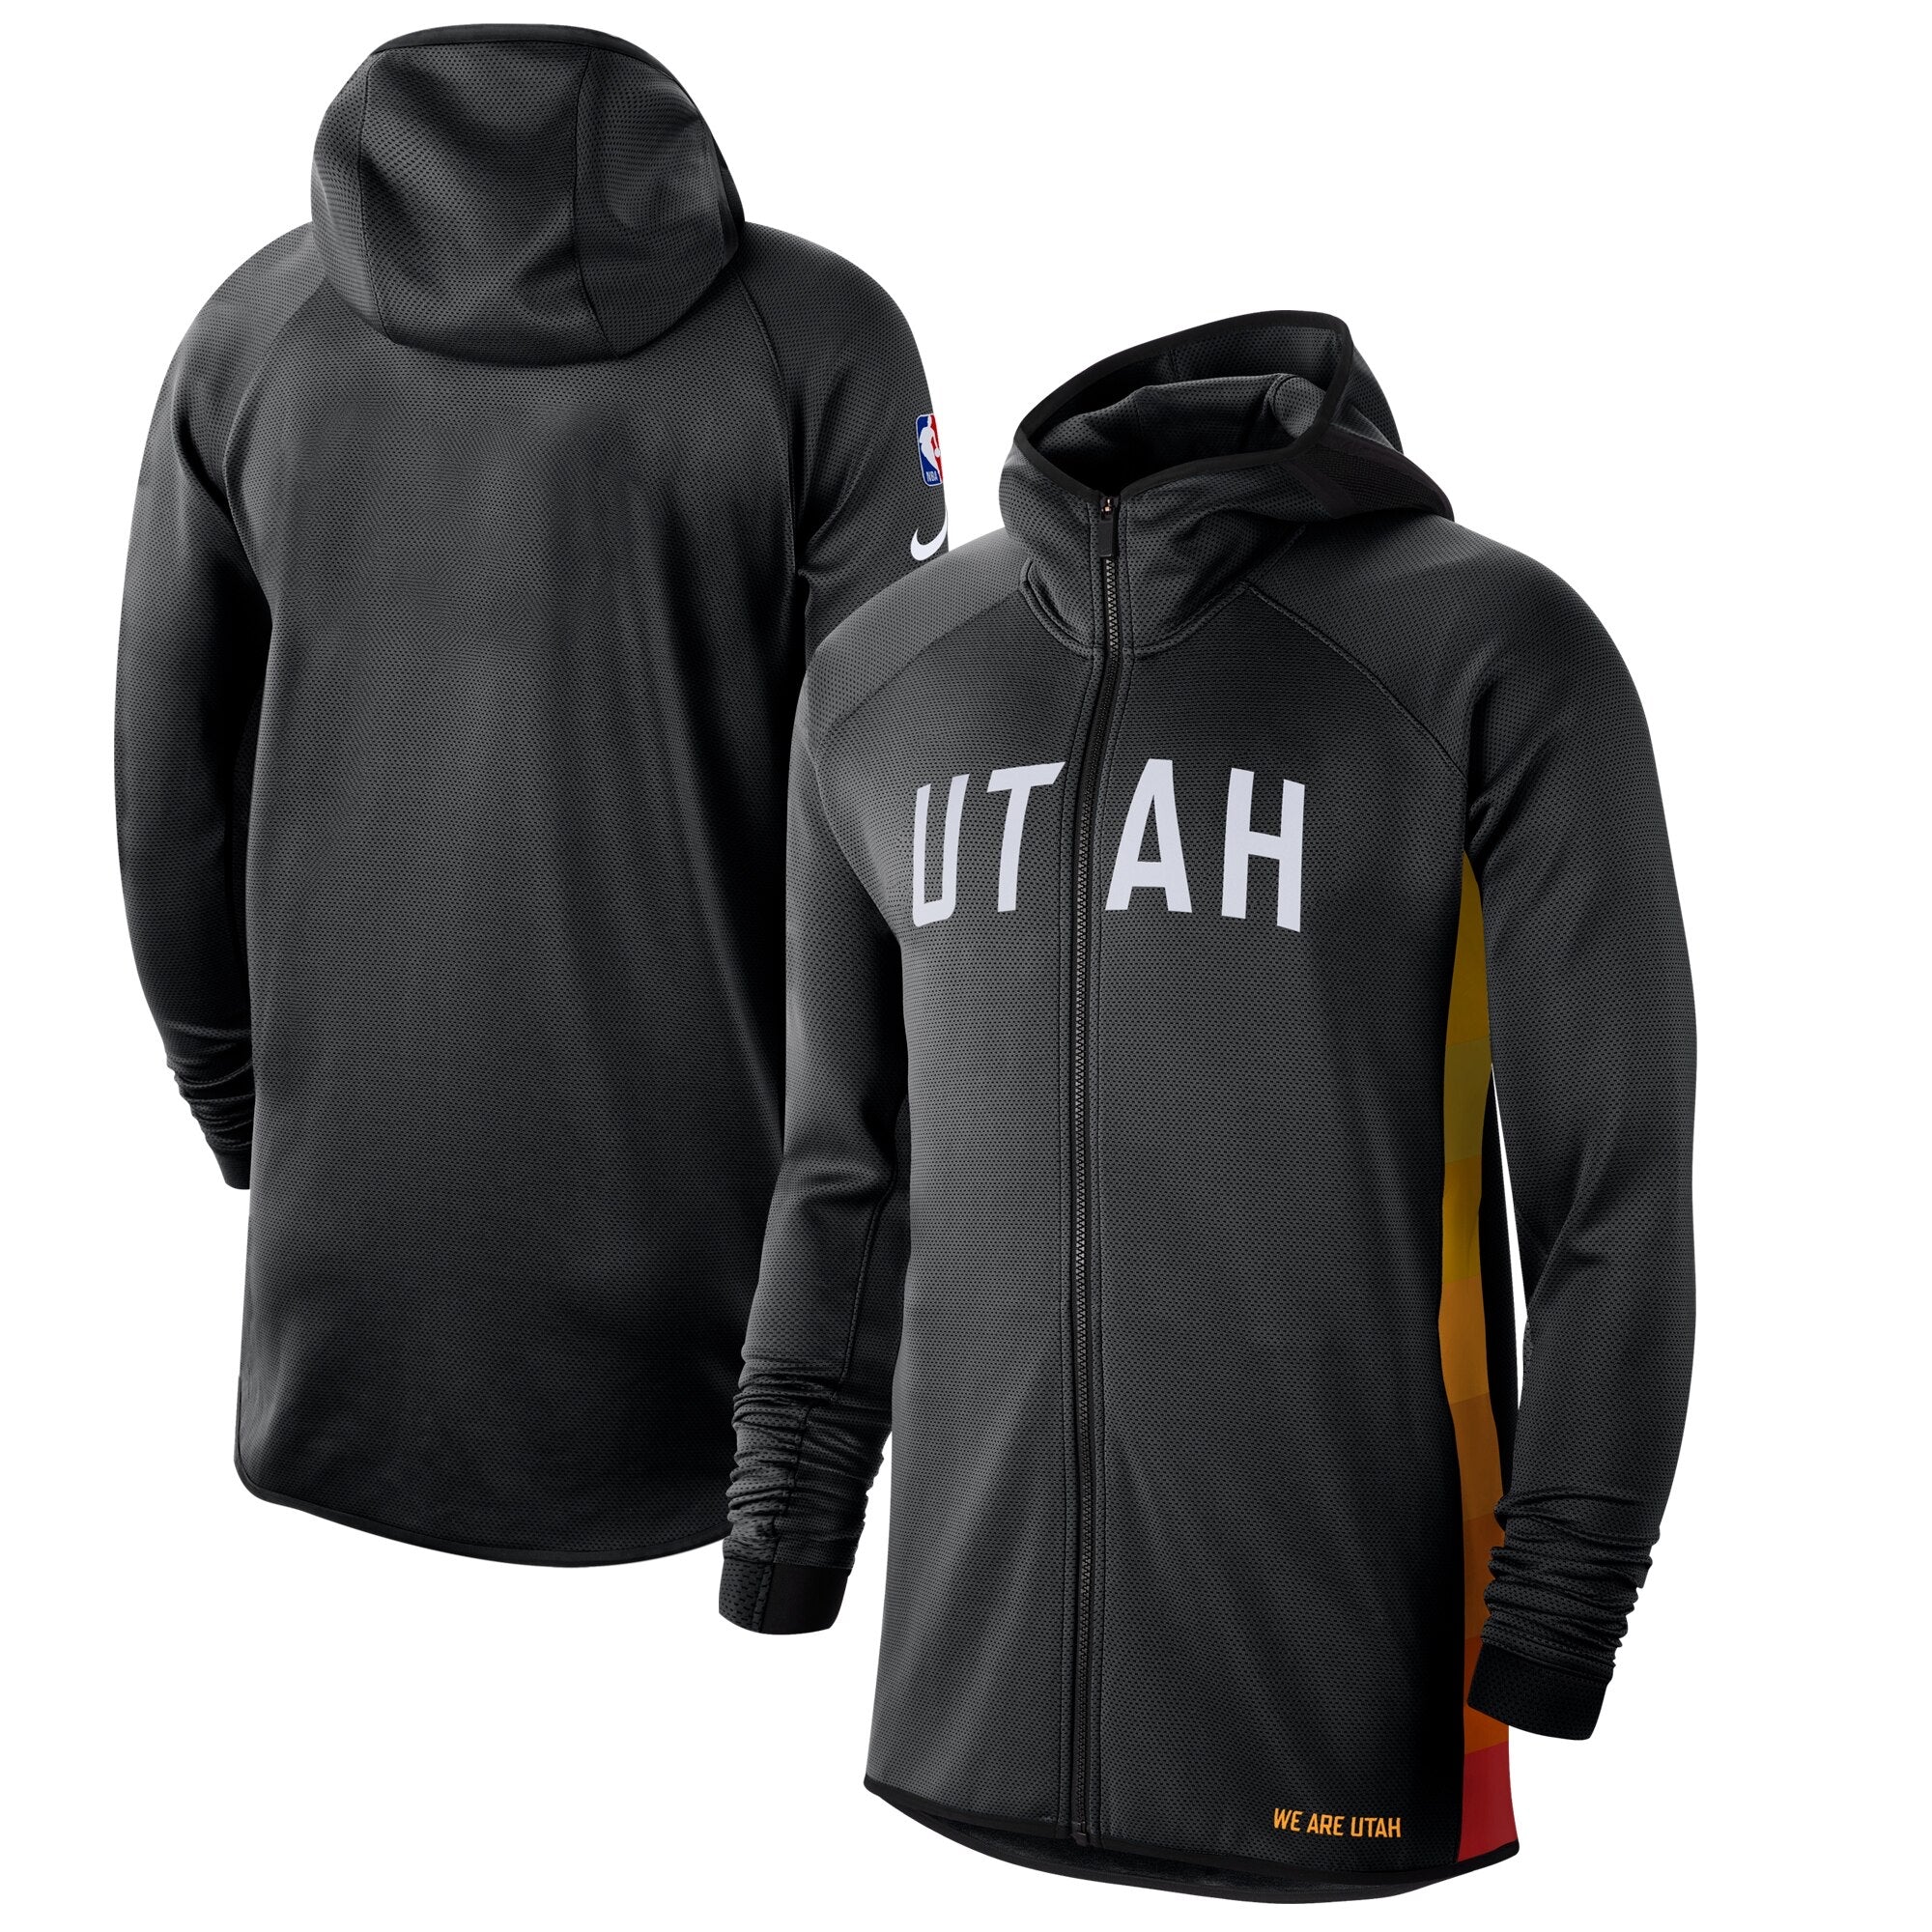 Utah jazz black long cut jacket